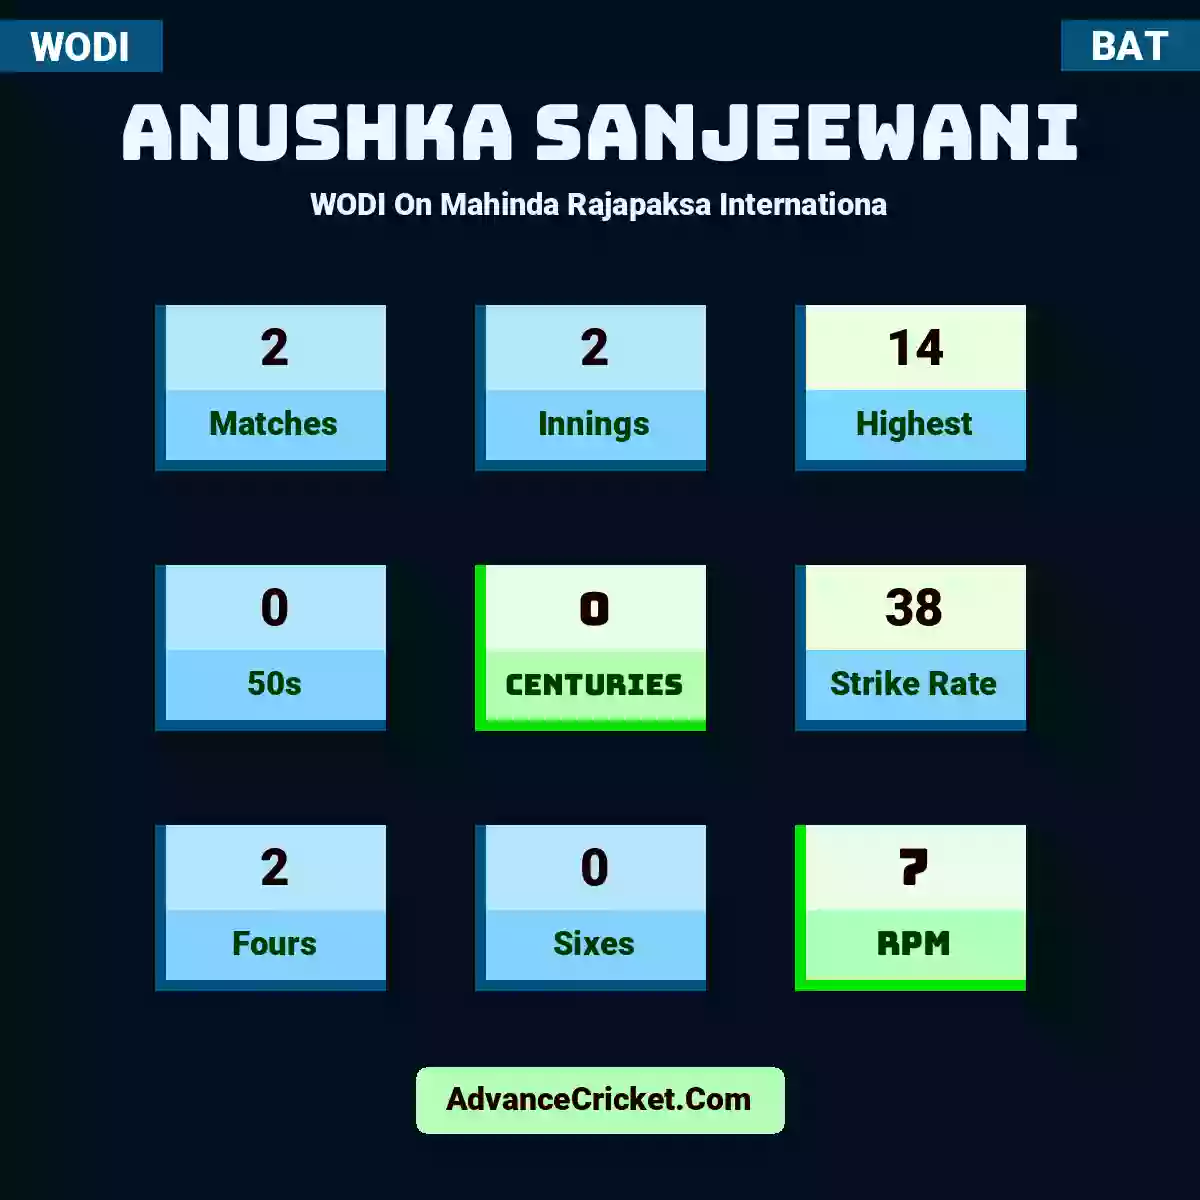 Anushka Sanjeewani WODI  On Mahinda Rajapaksa Internationa, Anushka Sanjeewani played 2 matches, scored 14 runs as highest, 0 half-centuries, and 0 centuries, with a strike rate of 38. A.Sanjeewani hit 2 fours and 0 sixes, with an RPM of 7.